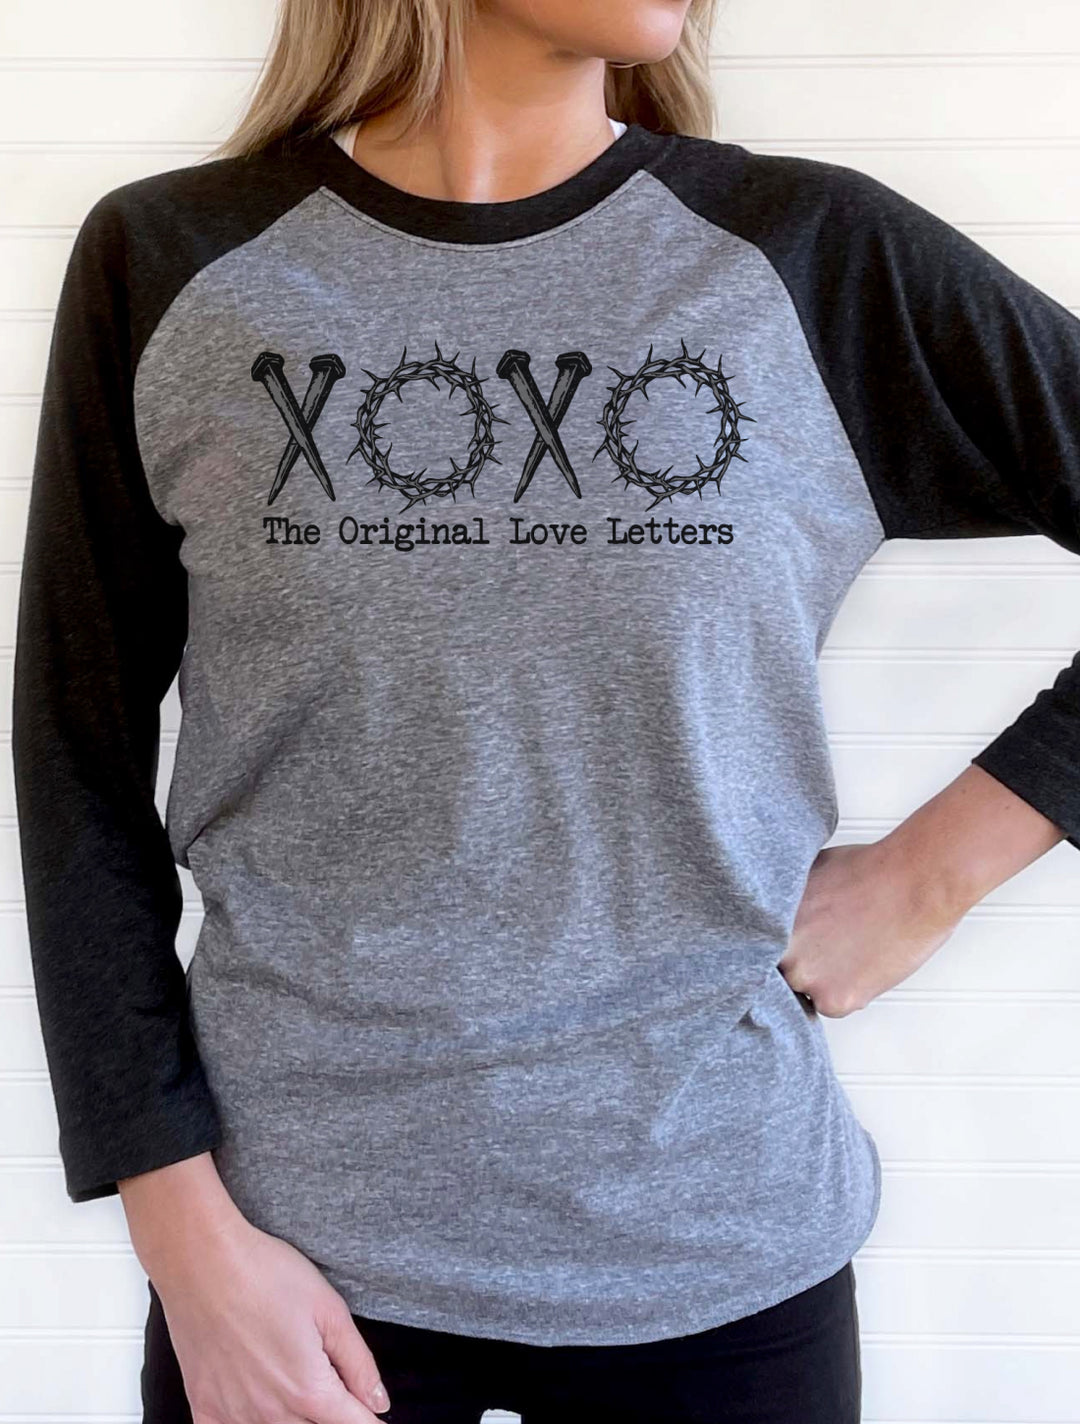 XOXO The Original Love Letters - Unisex Tri-Blend 3/4 Sleeve Raglan Tee